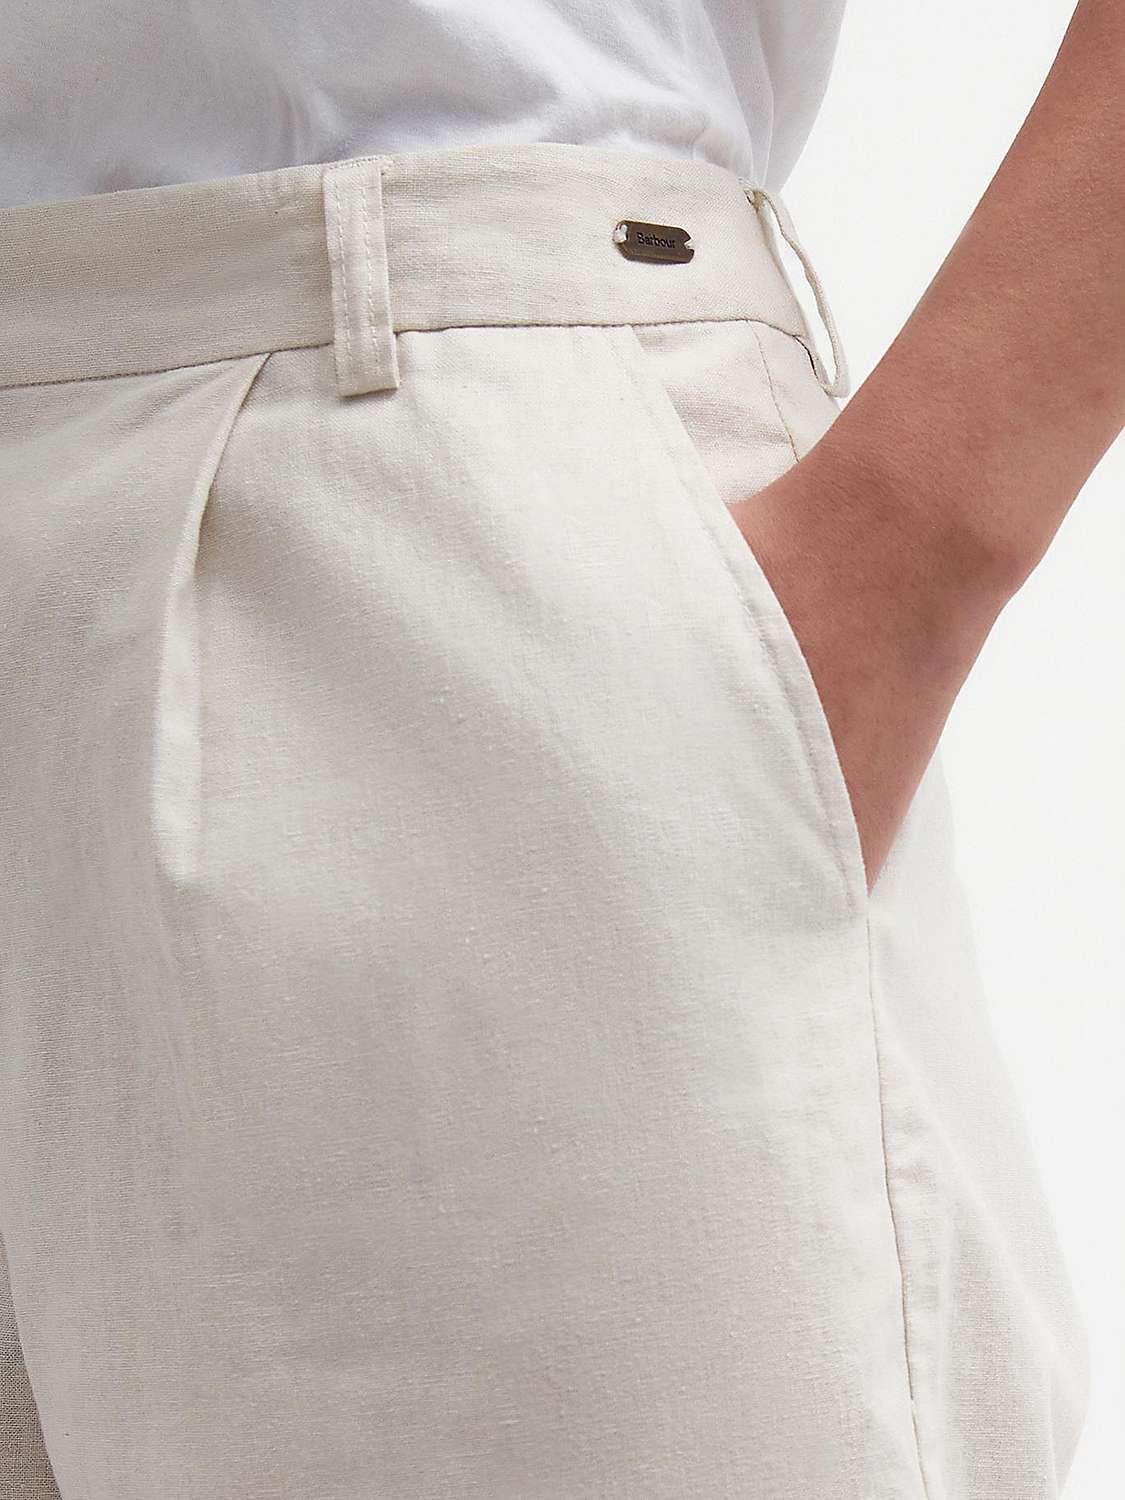 Buy Barbour Daria Linen Blend Shorts, French Oak Online at johnlewis.com